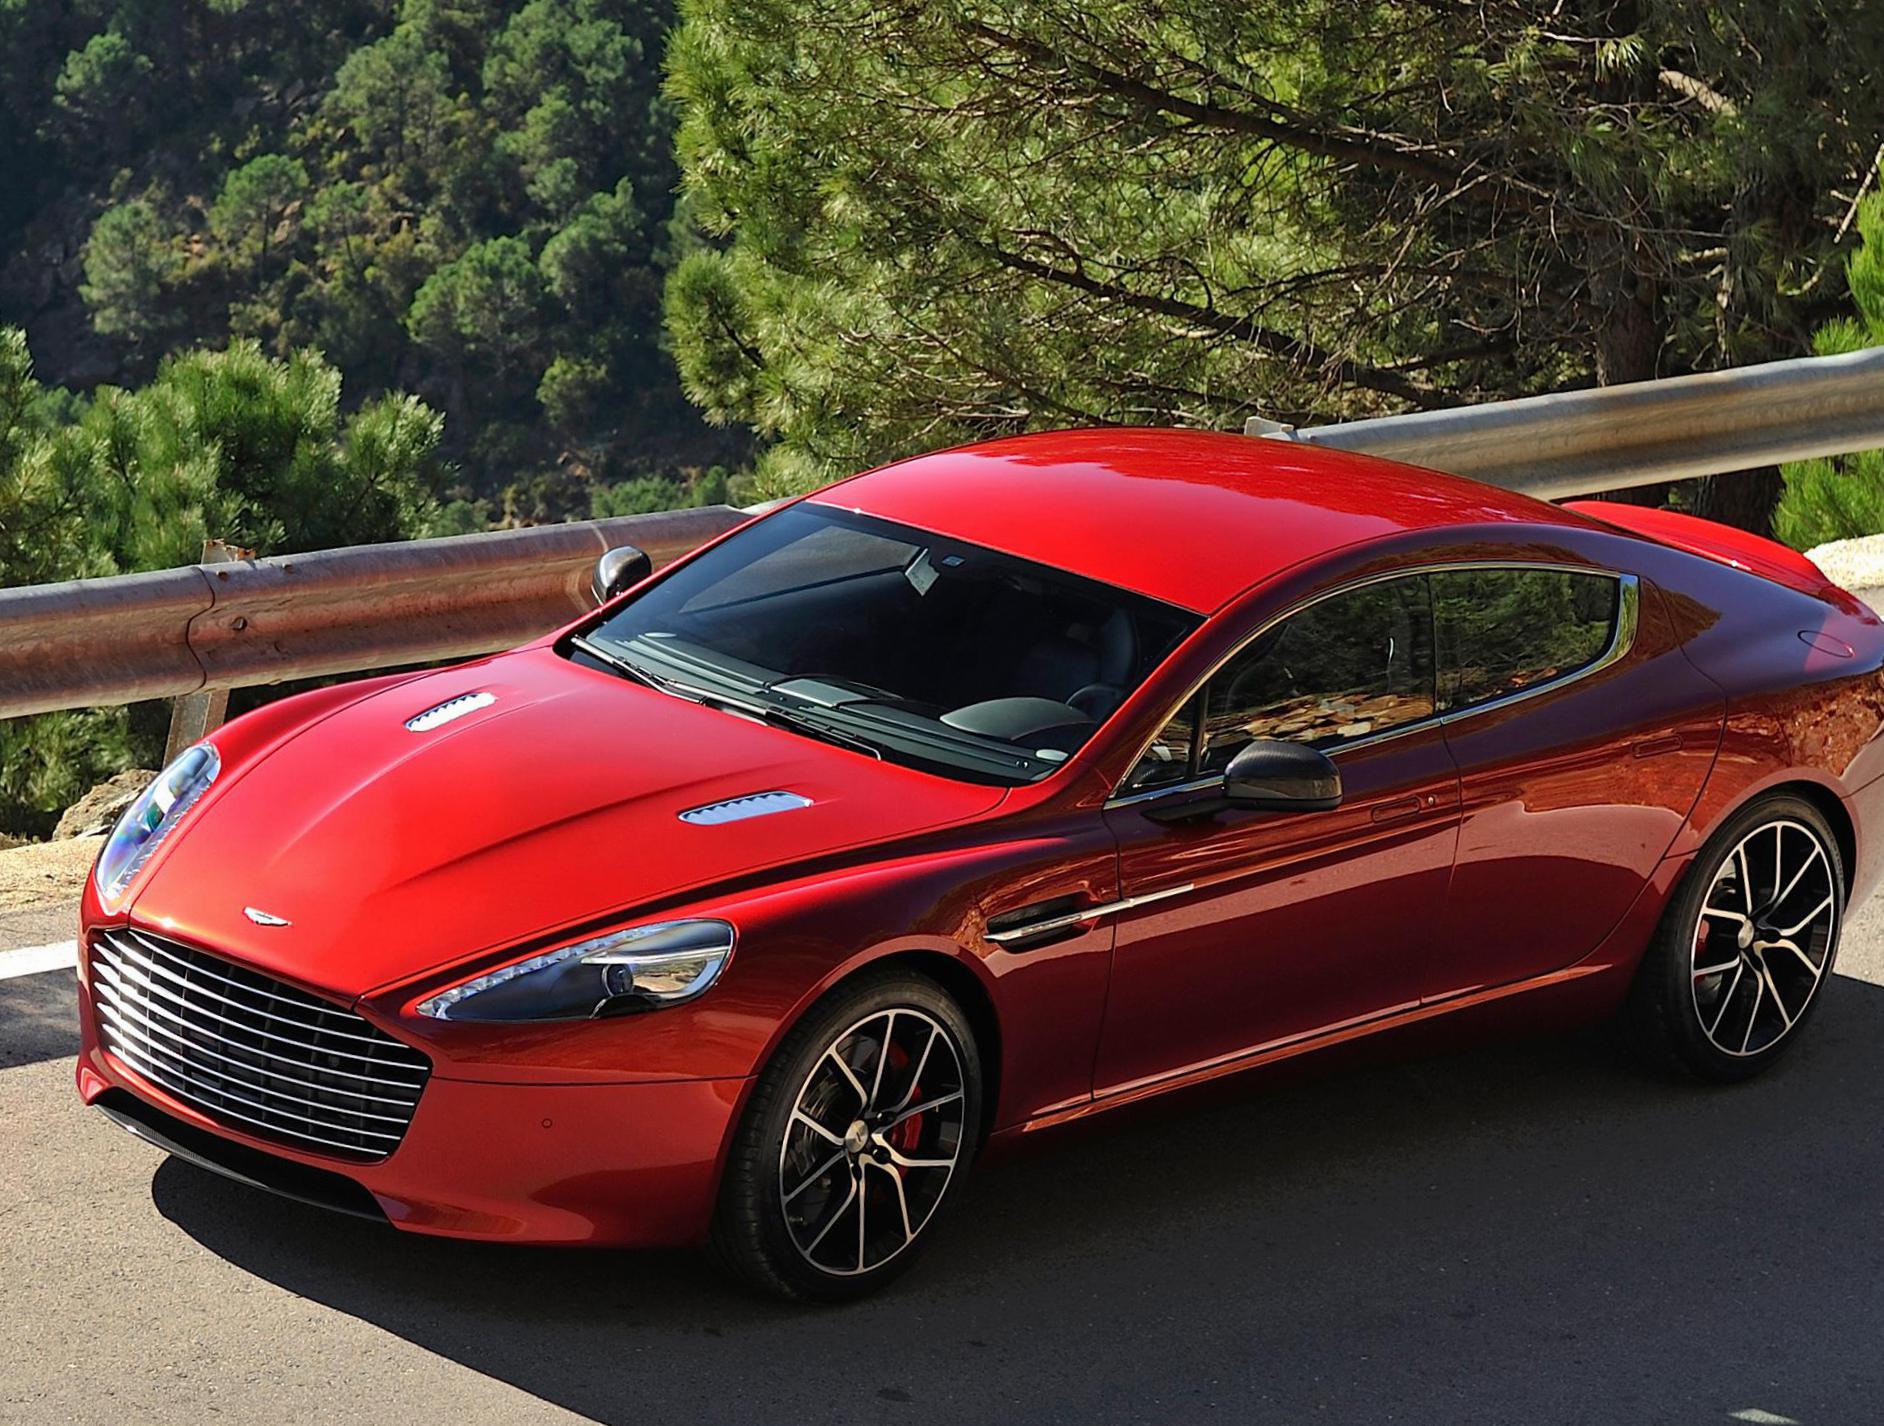 Rapide S Aston Martin price 2014